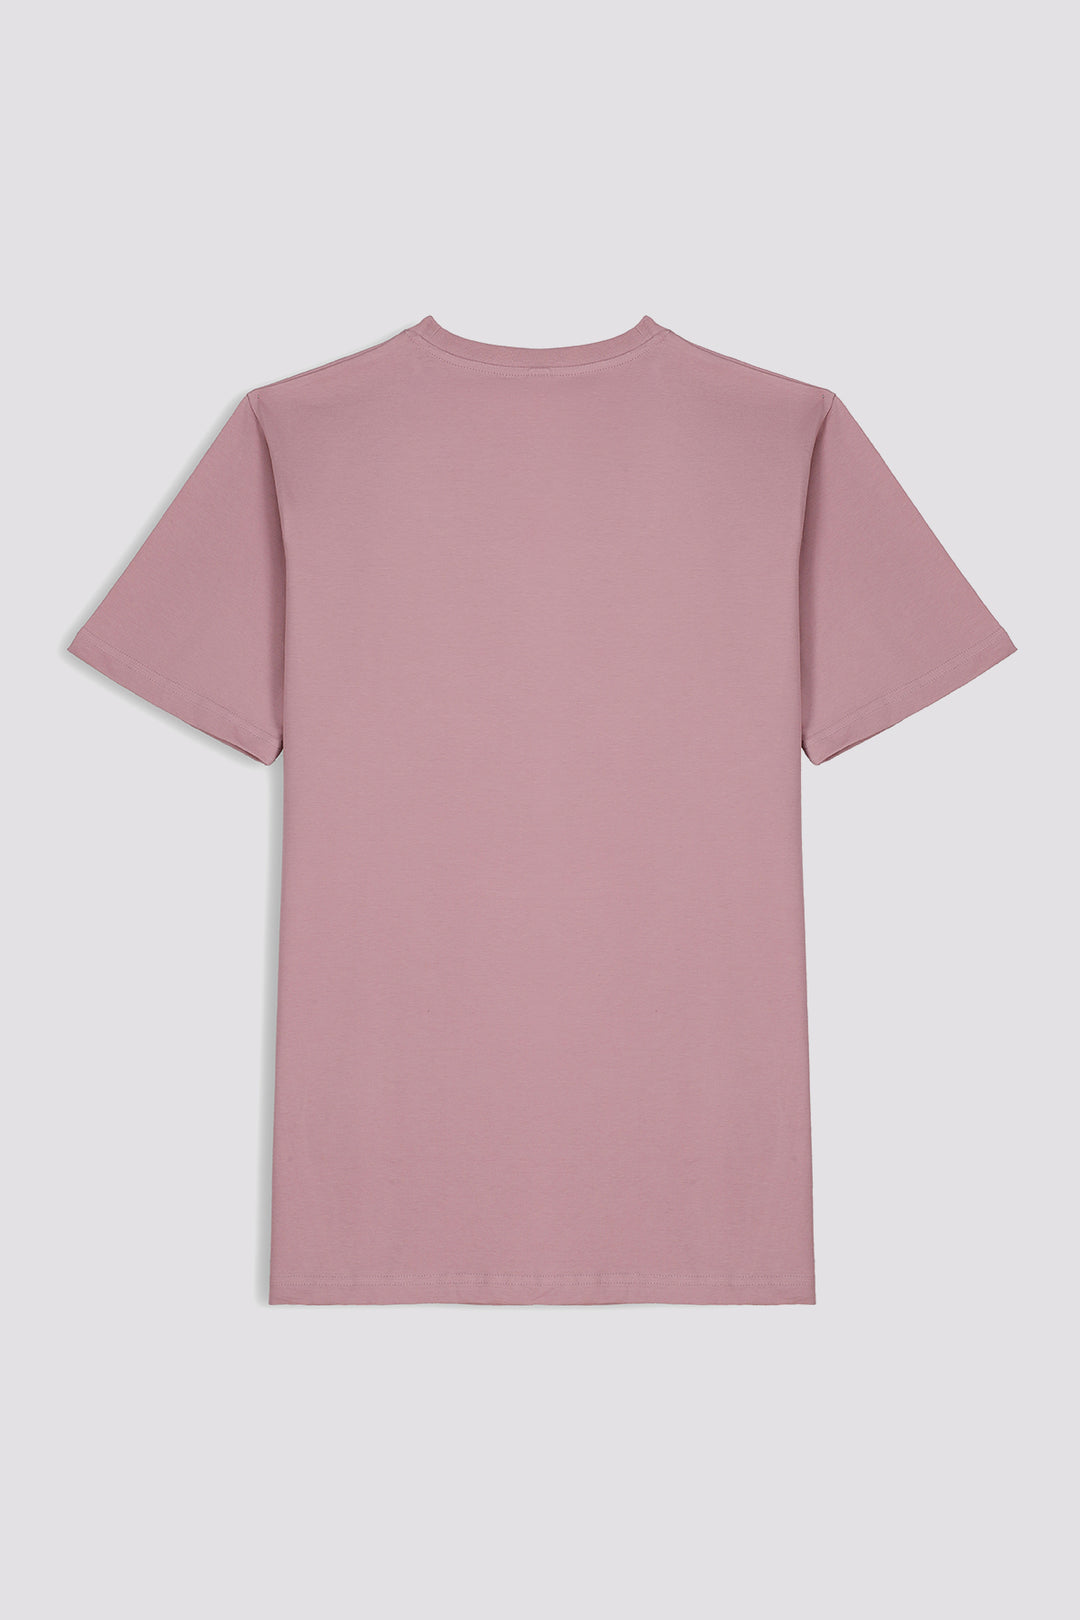 Palmolive New Reign Graphic T-Shirt - S23 - MT0310R